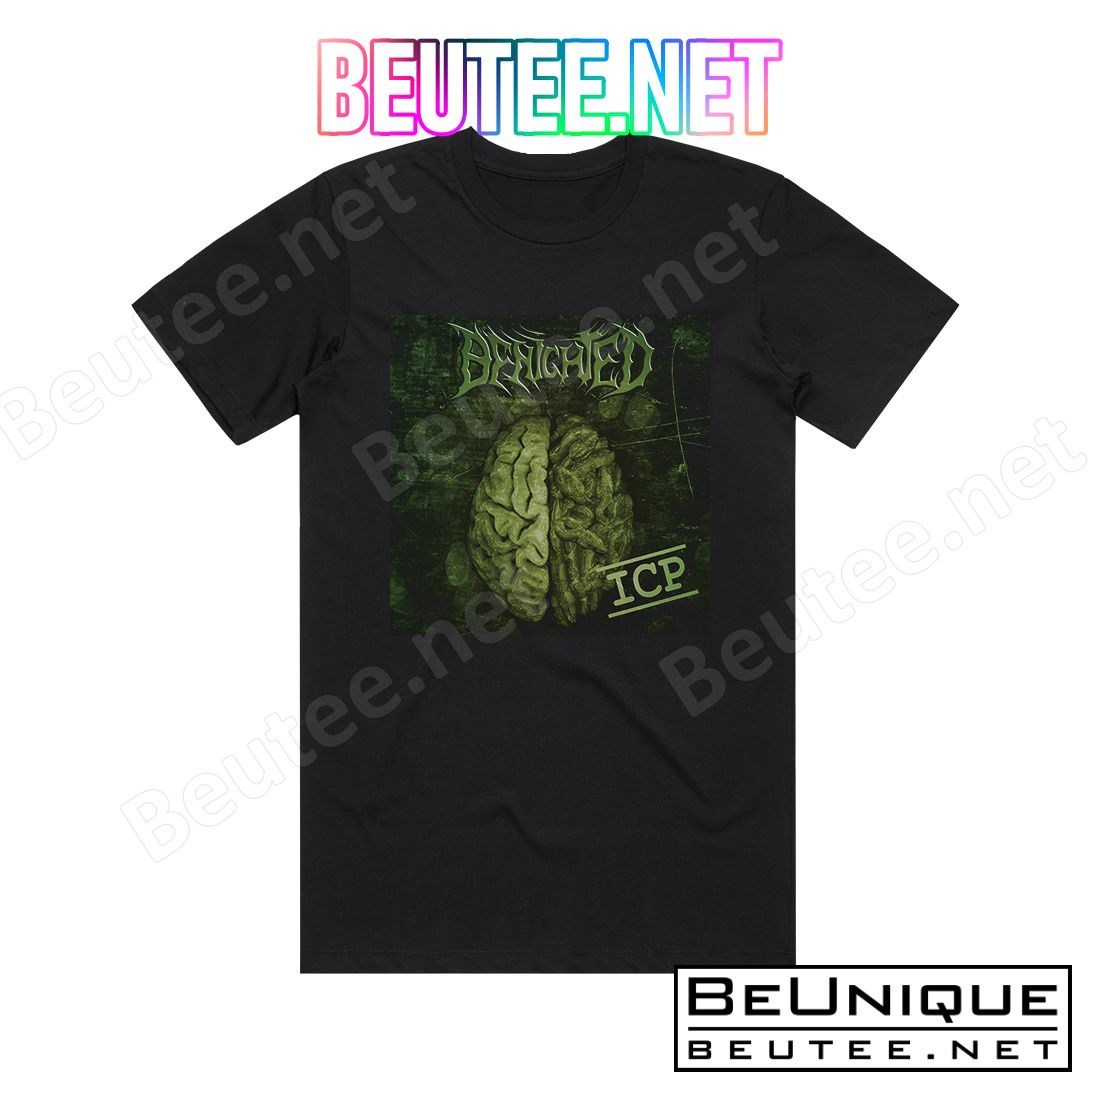 Benighted Insane Cephalic Production 2 Album Cover T-Shirt